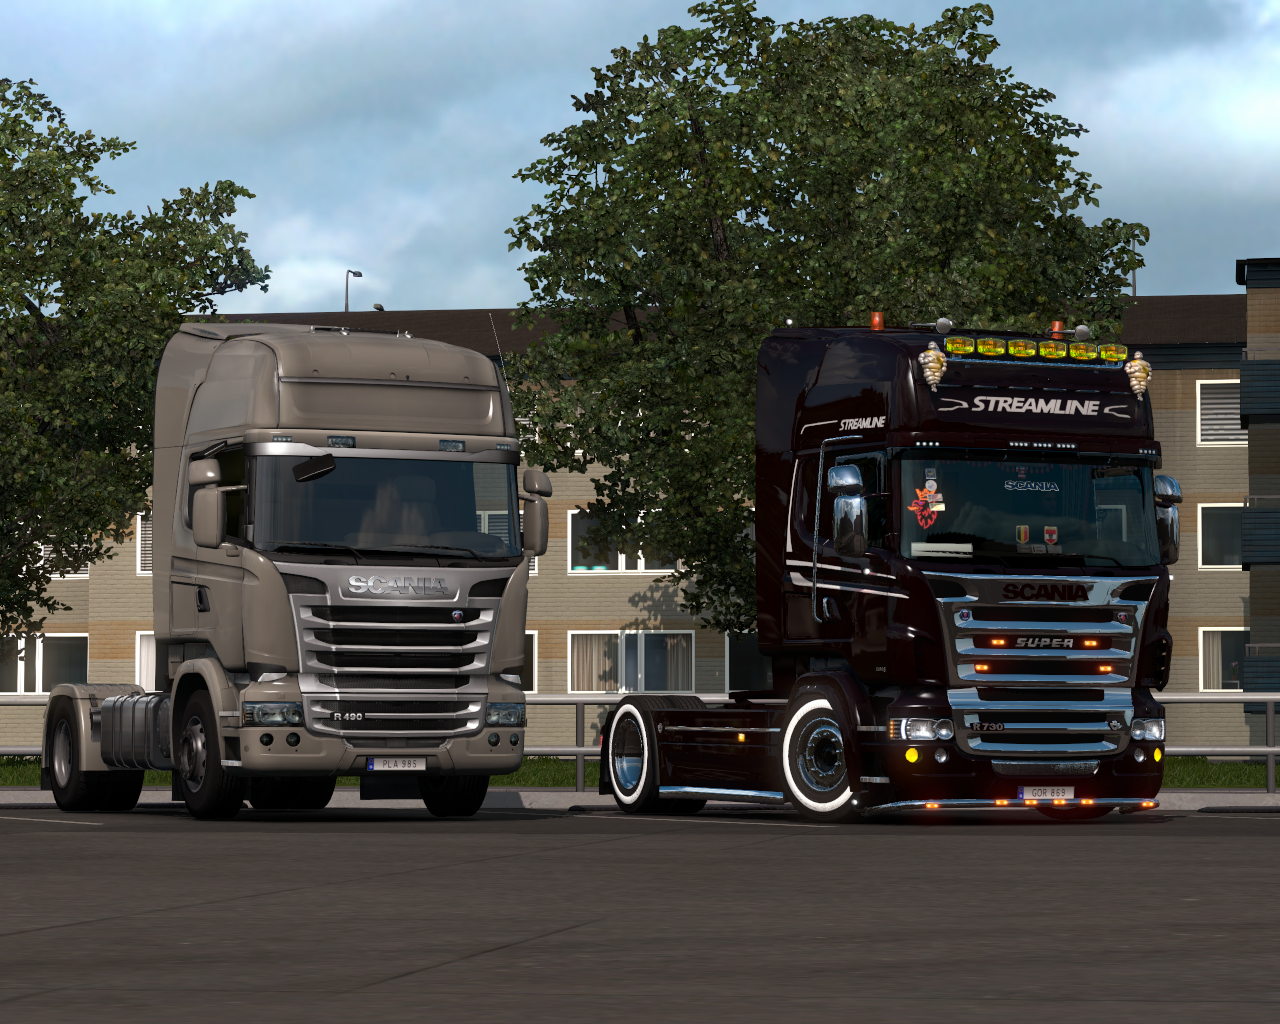 Euro Truck Simulator 2 (2012) [ANA KONU] » Sayfa 3558 3627